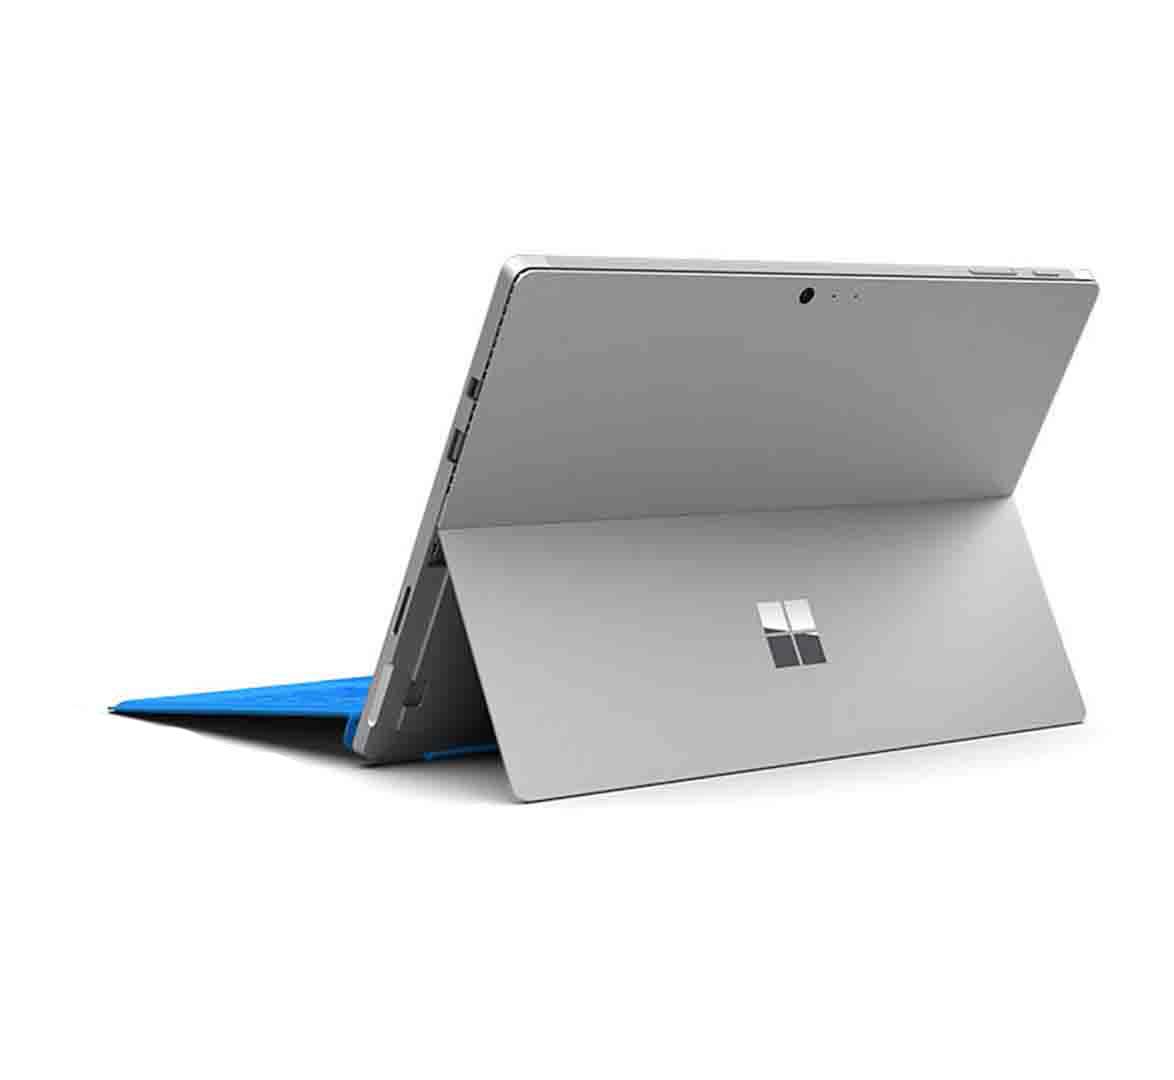 Microsoft Surface Pro 4 i5 128GB, Black/Silver Refurbished Pristine